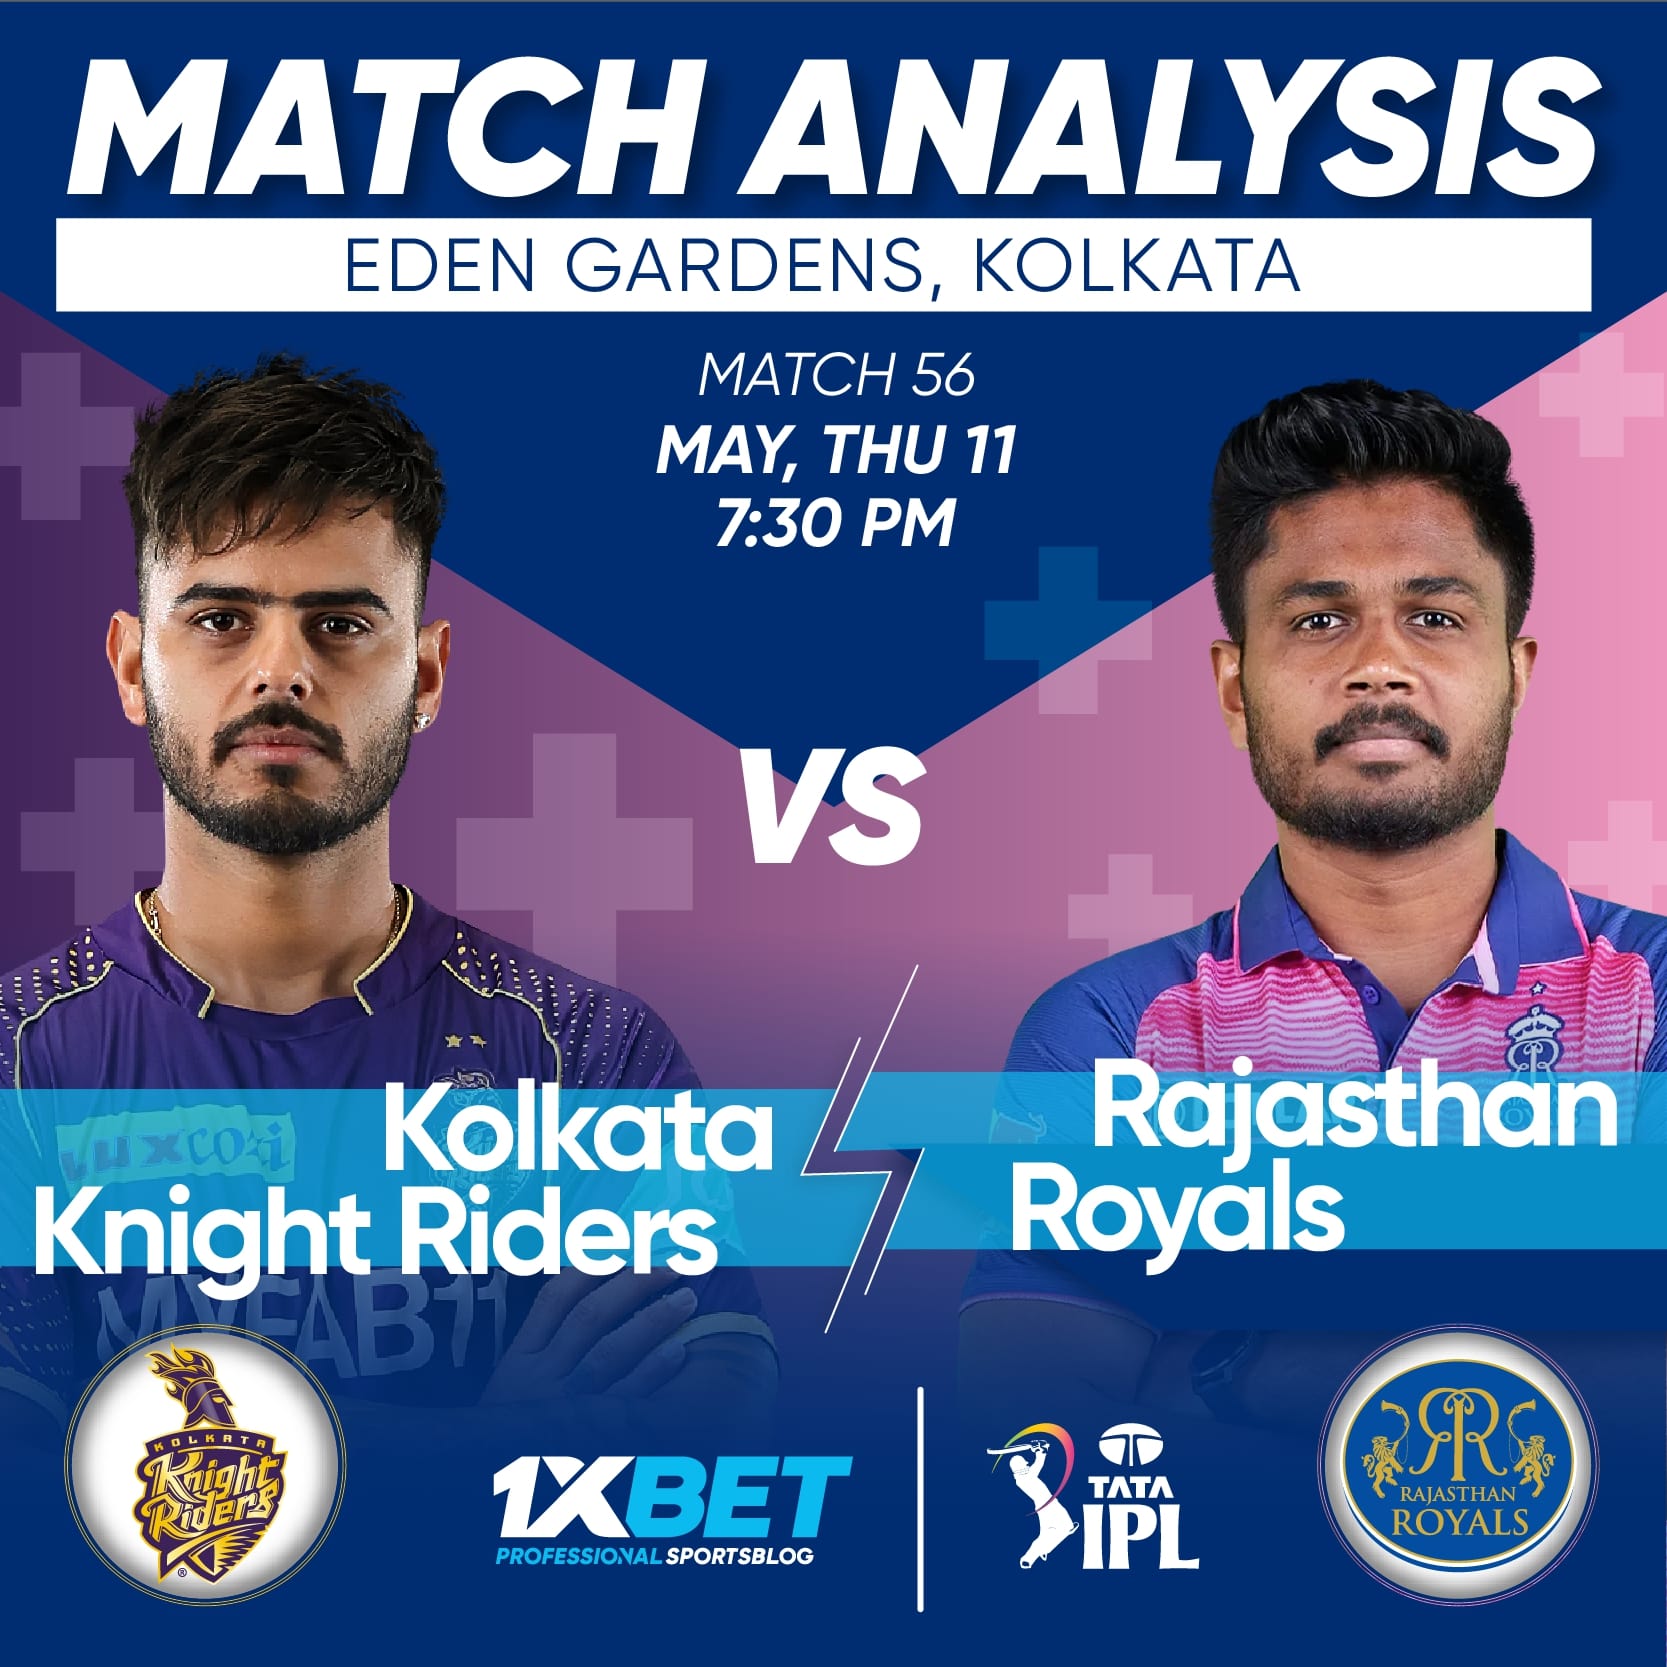 Kolkata Knight Riders vs Rajasthan Royals, IPL 2023, 56th Match Analysis